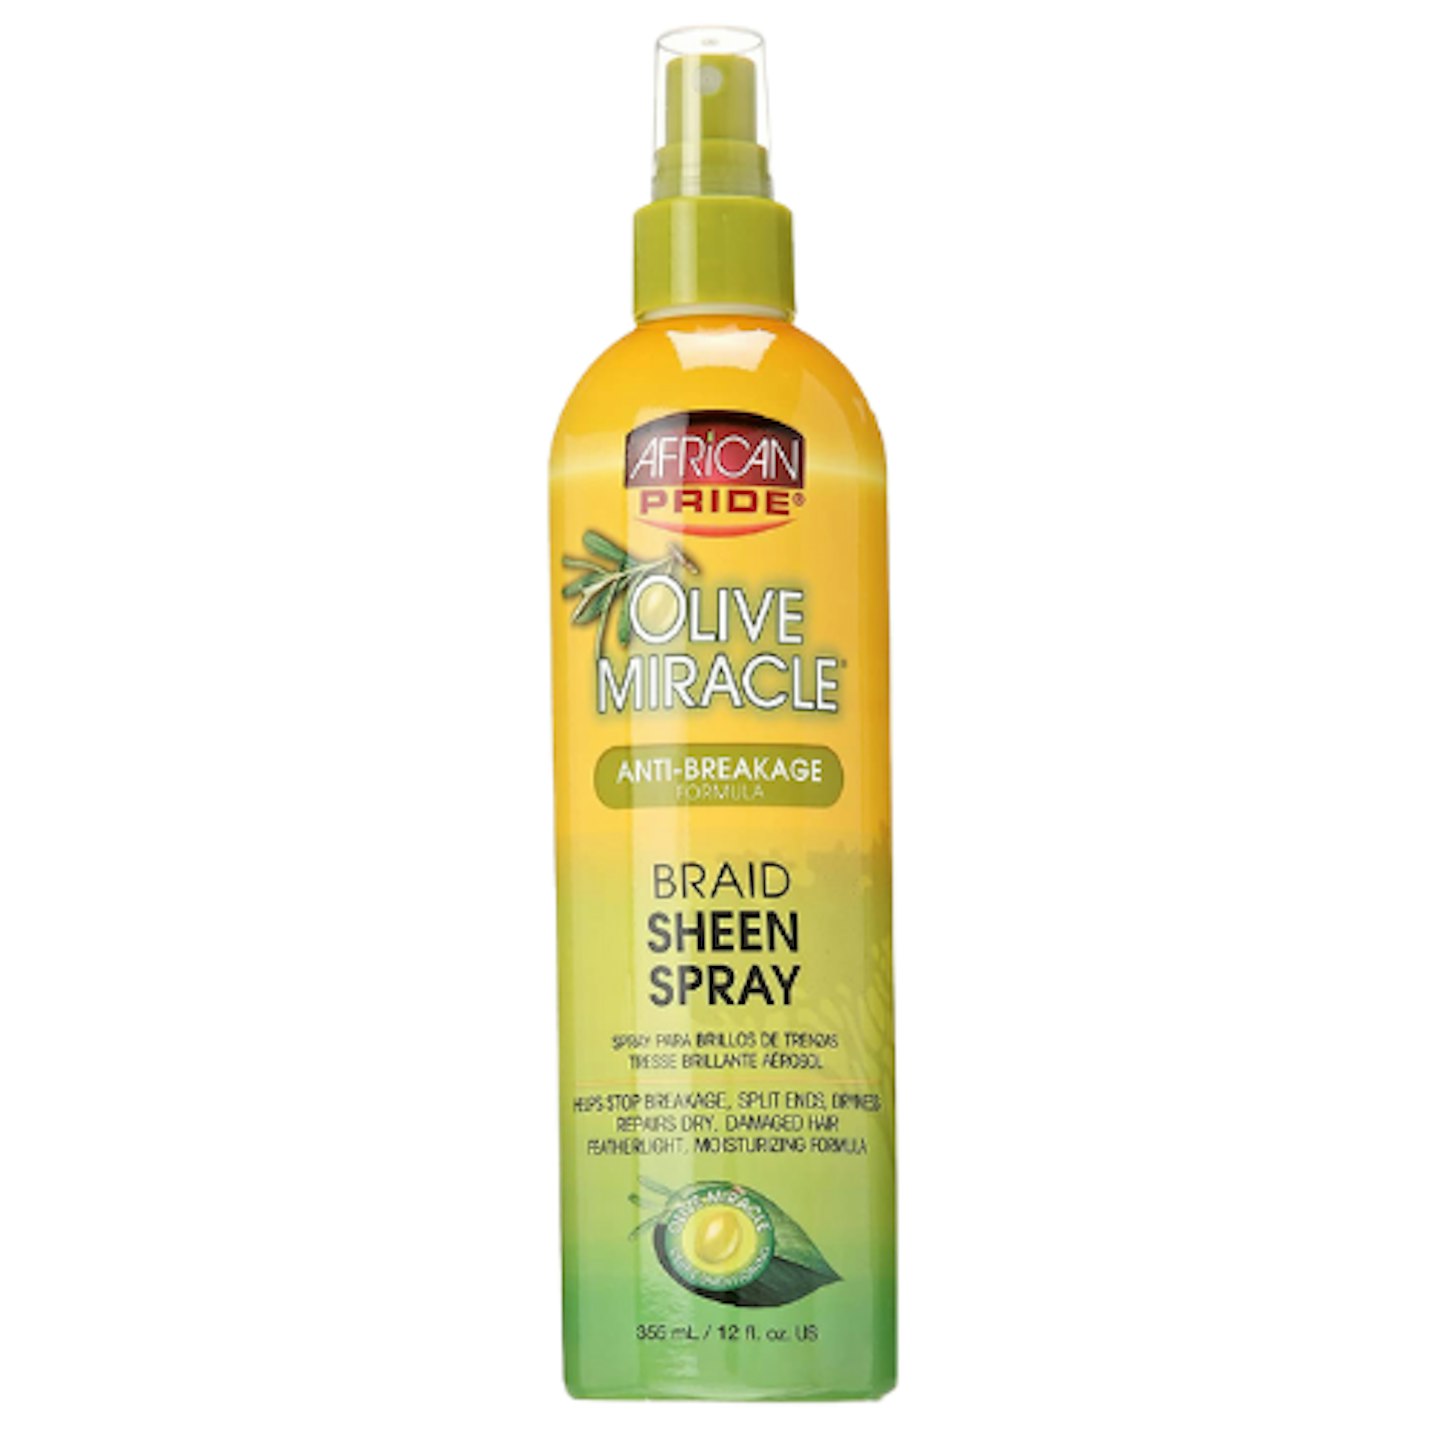 African Pride Olive Miracle Anti-Breakage Braid Sheen Spray